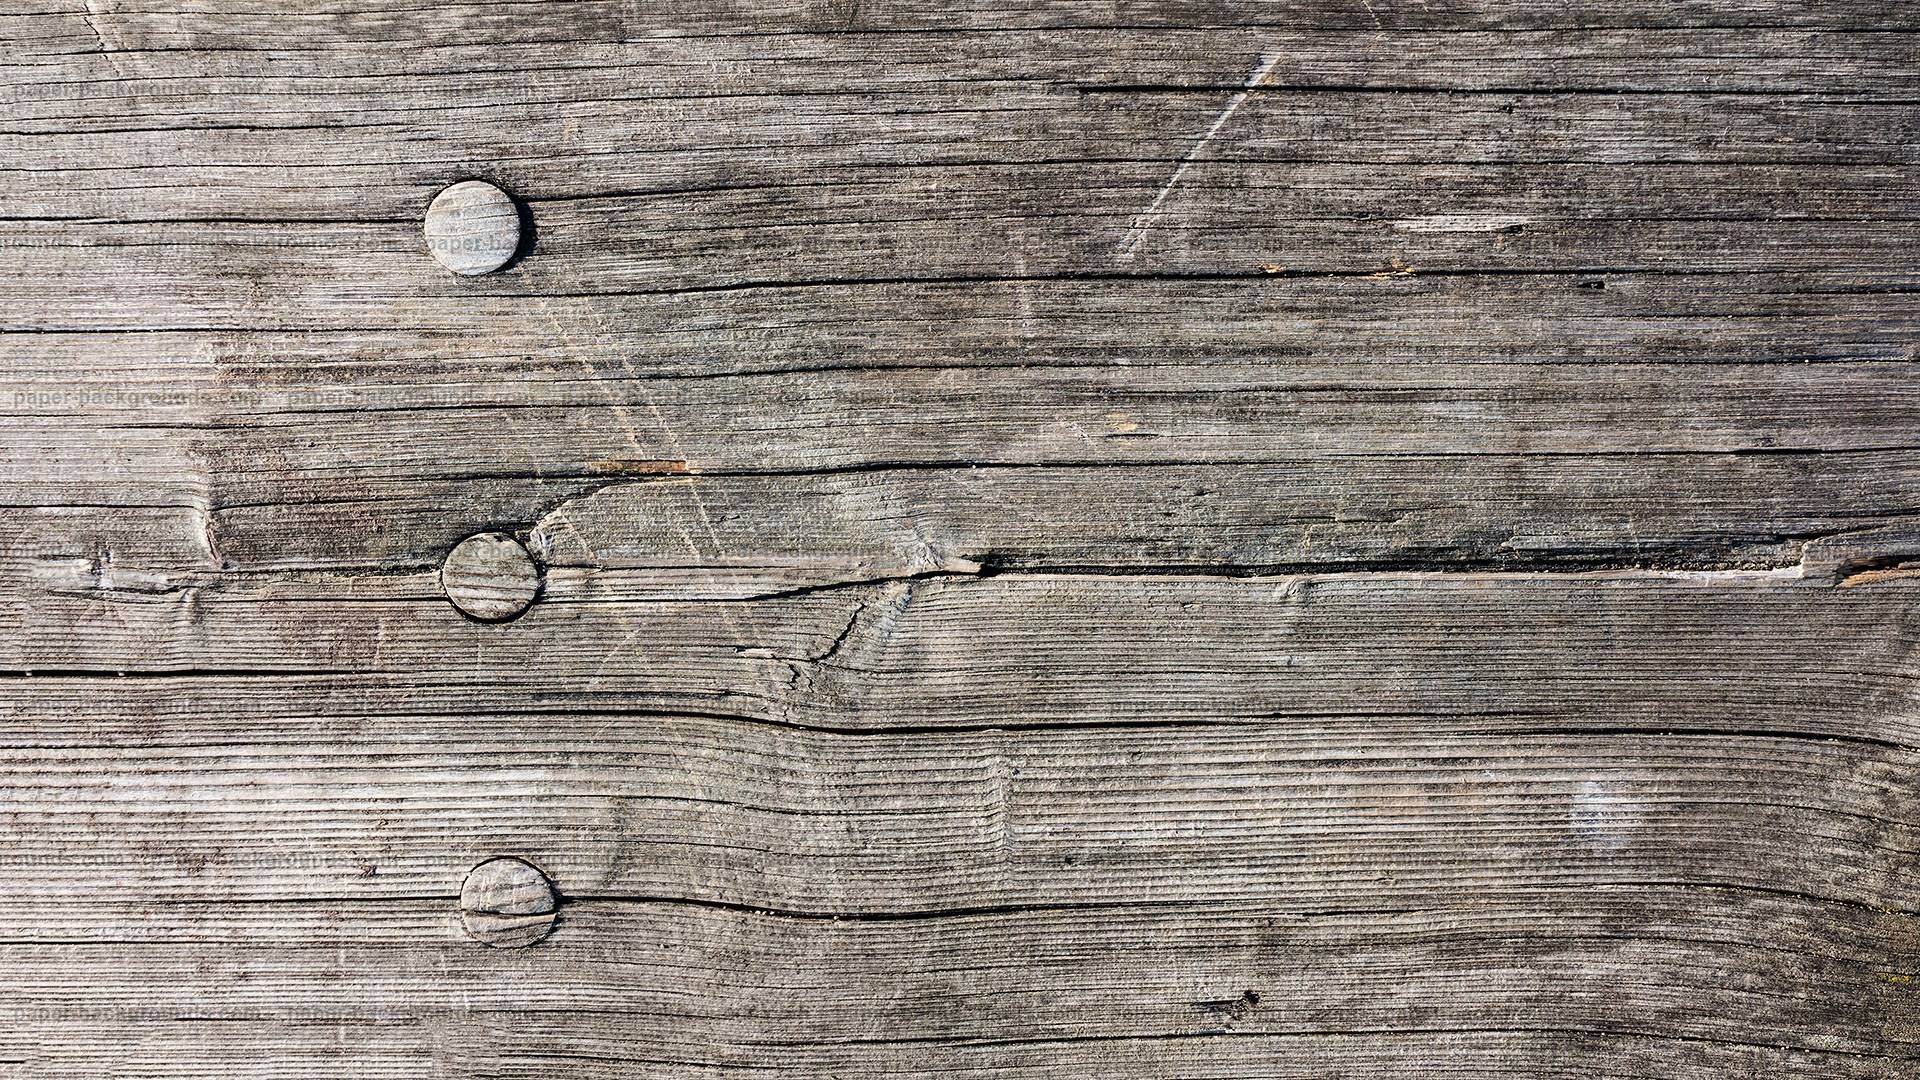 Old Wood Board Texture